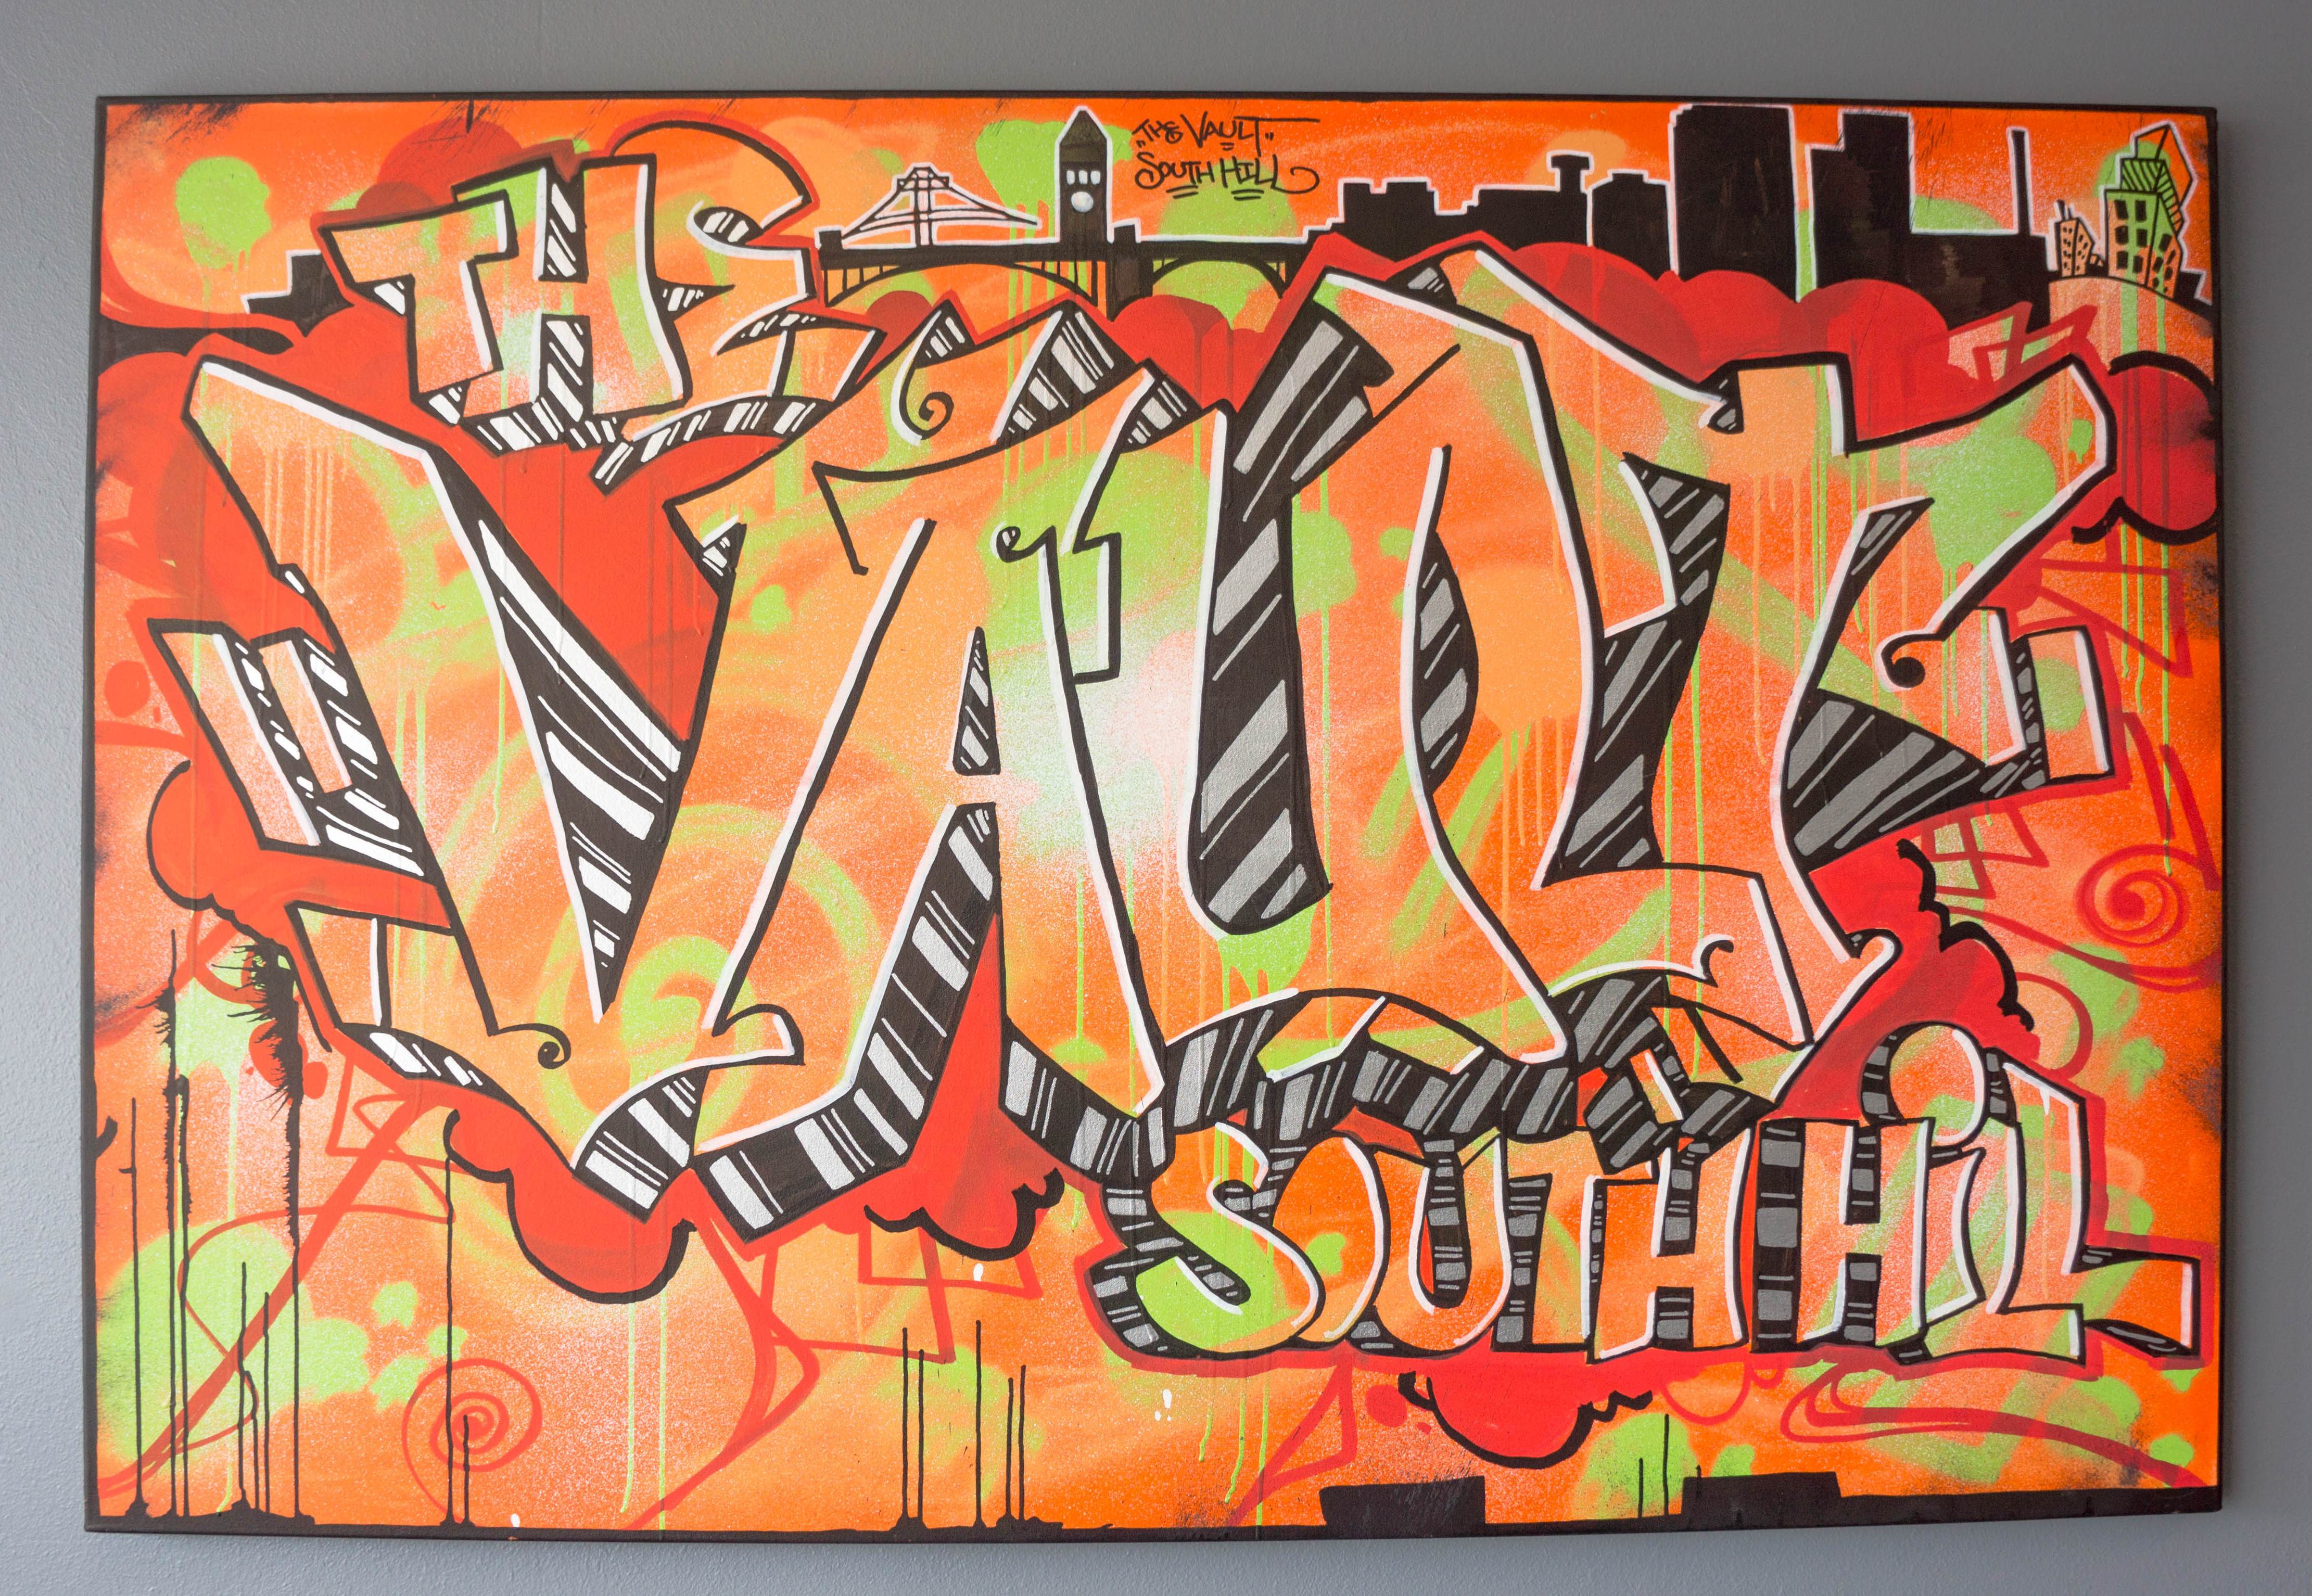 The Vault Cannabis Spokane South Hill Wall Art graffiti style